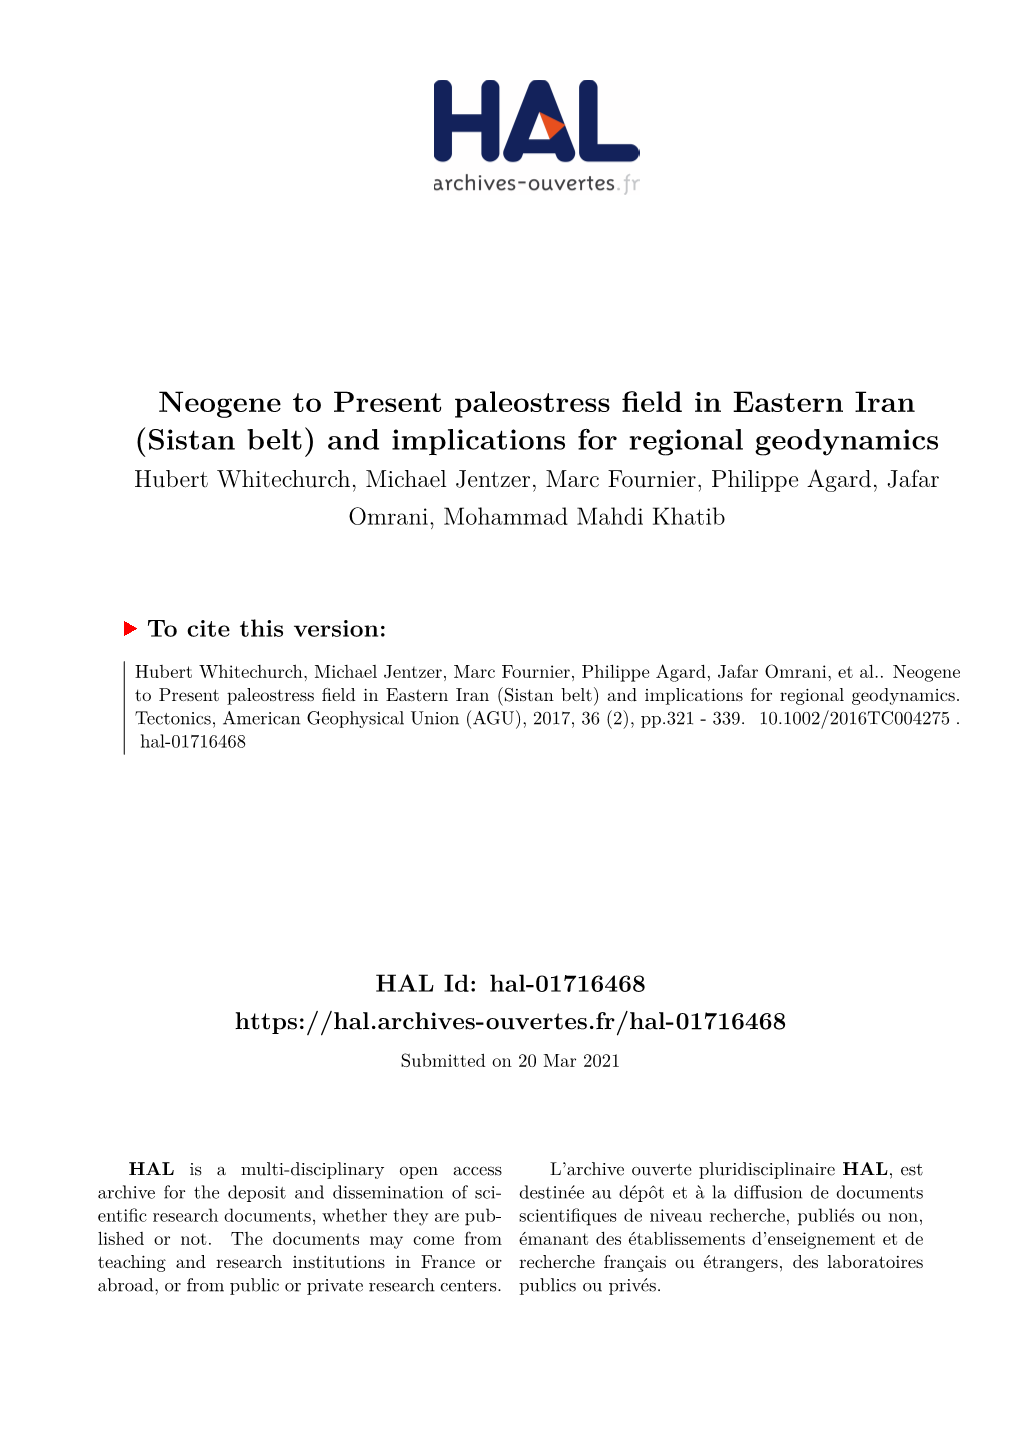 Neogene to Present Paleostress Field in Eastern